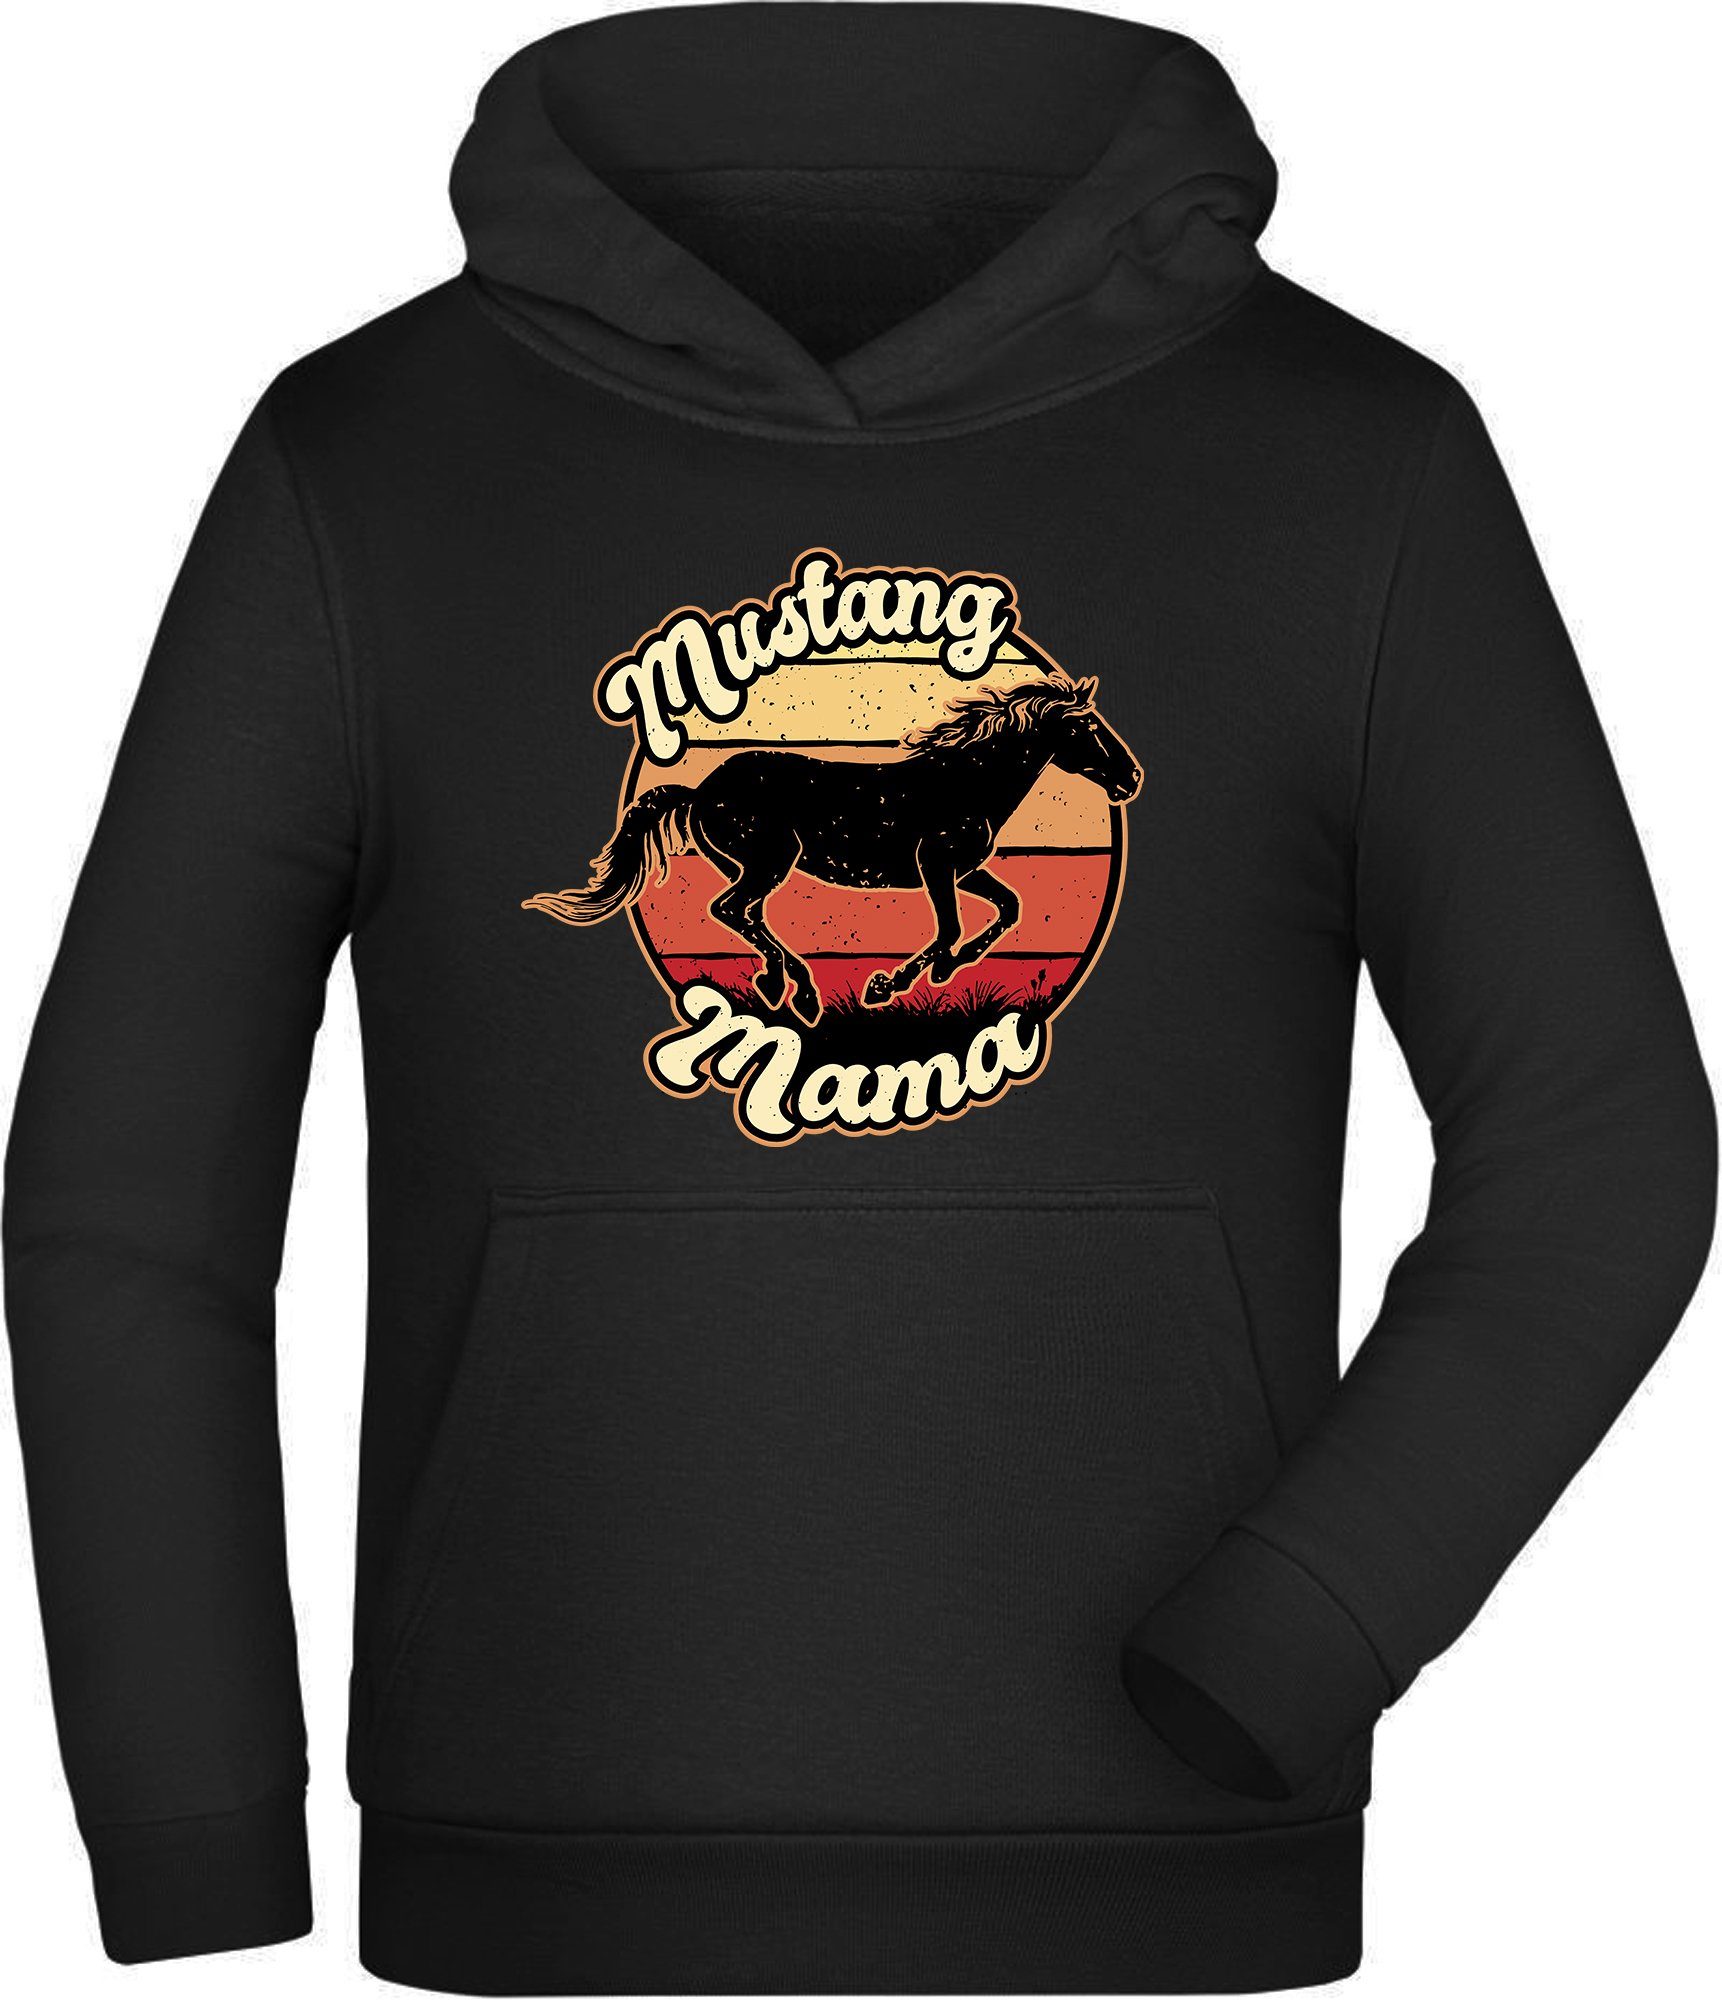 MyDesign24 i164 Hoodie mit Aufdruck, Mama Kapuzensweater Hoodie Sweatshirt Kinder Kapuzen Pferde Mustang